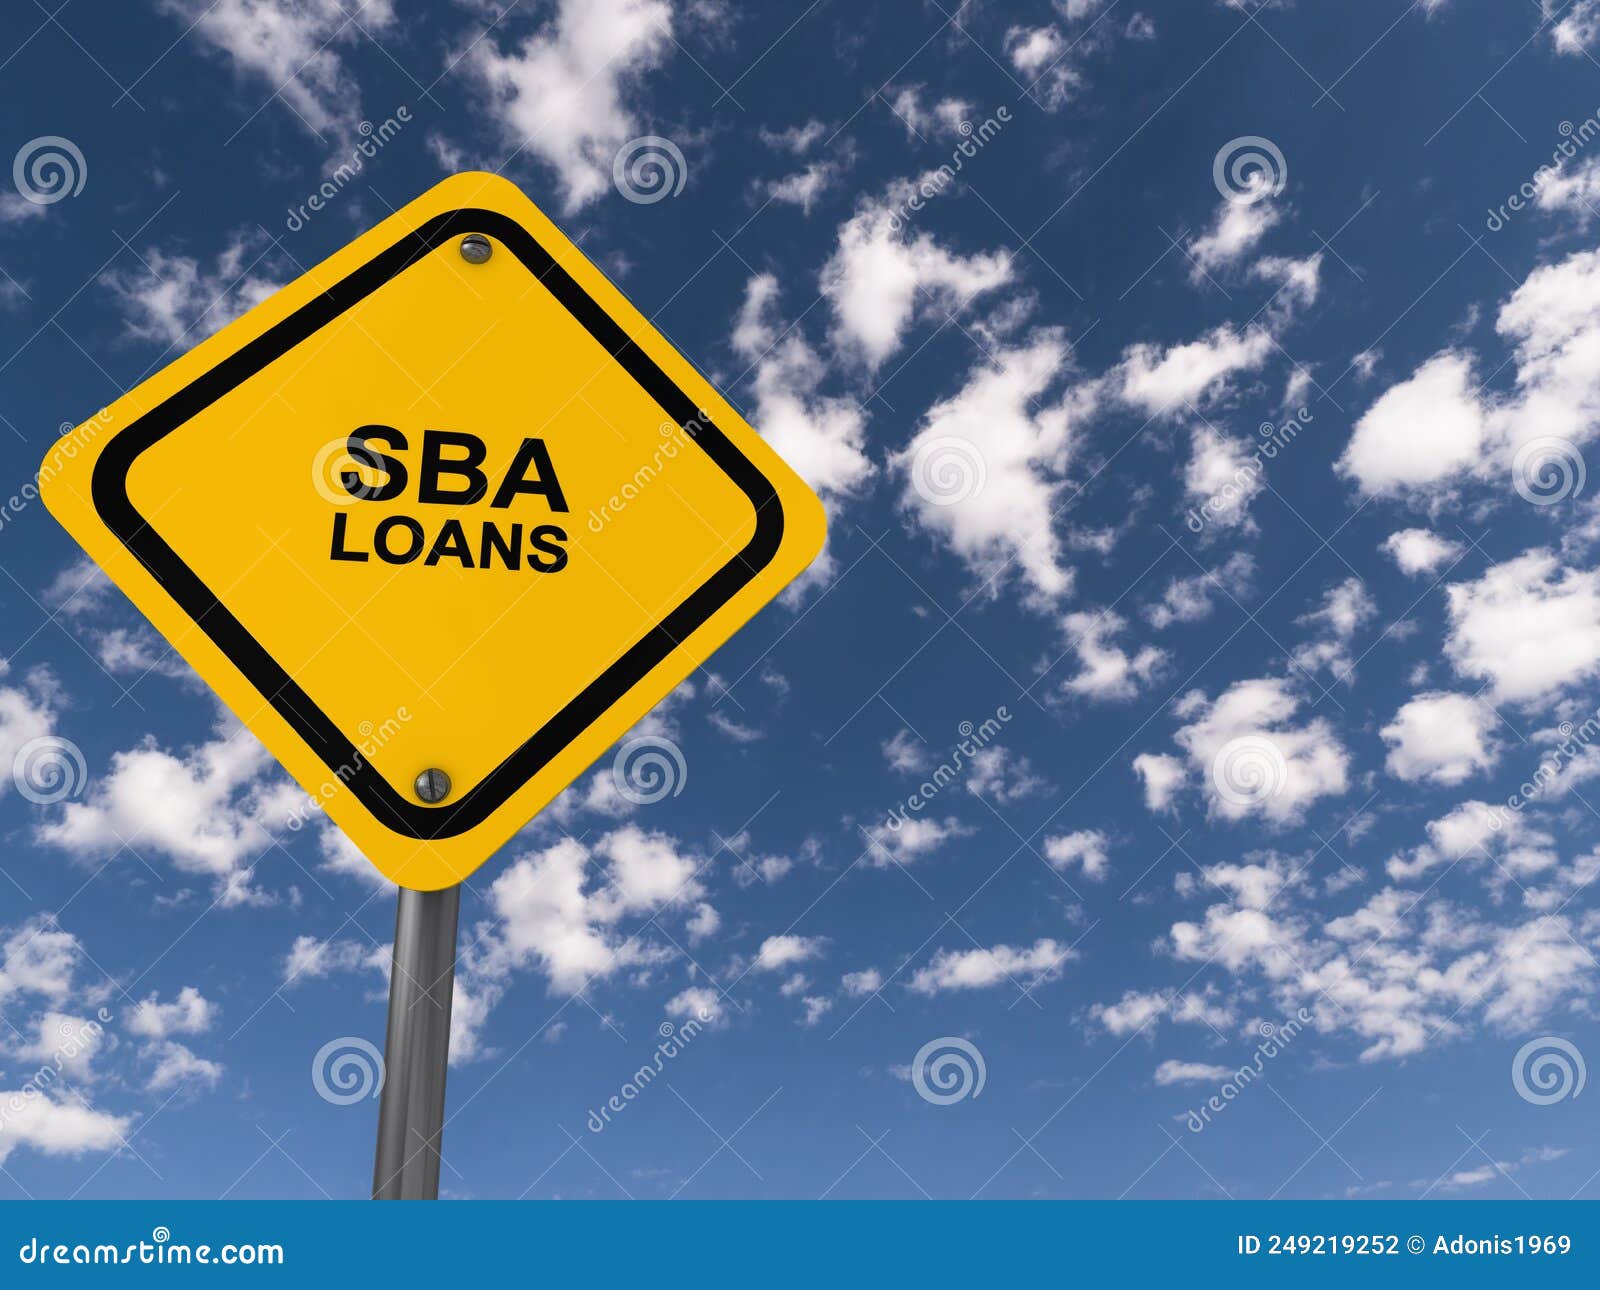 sba loans traffic sign